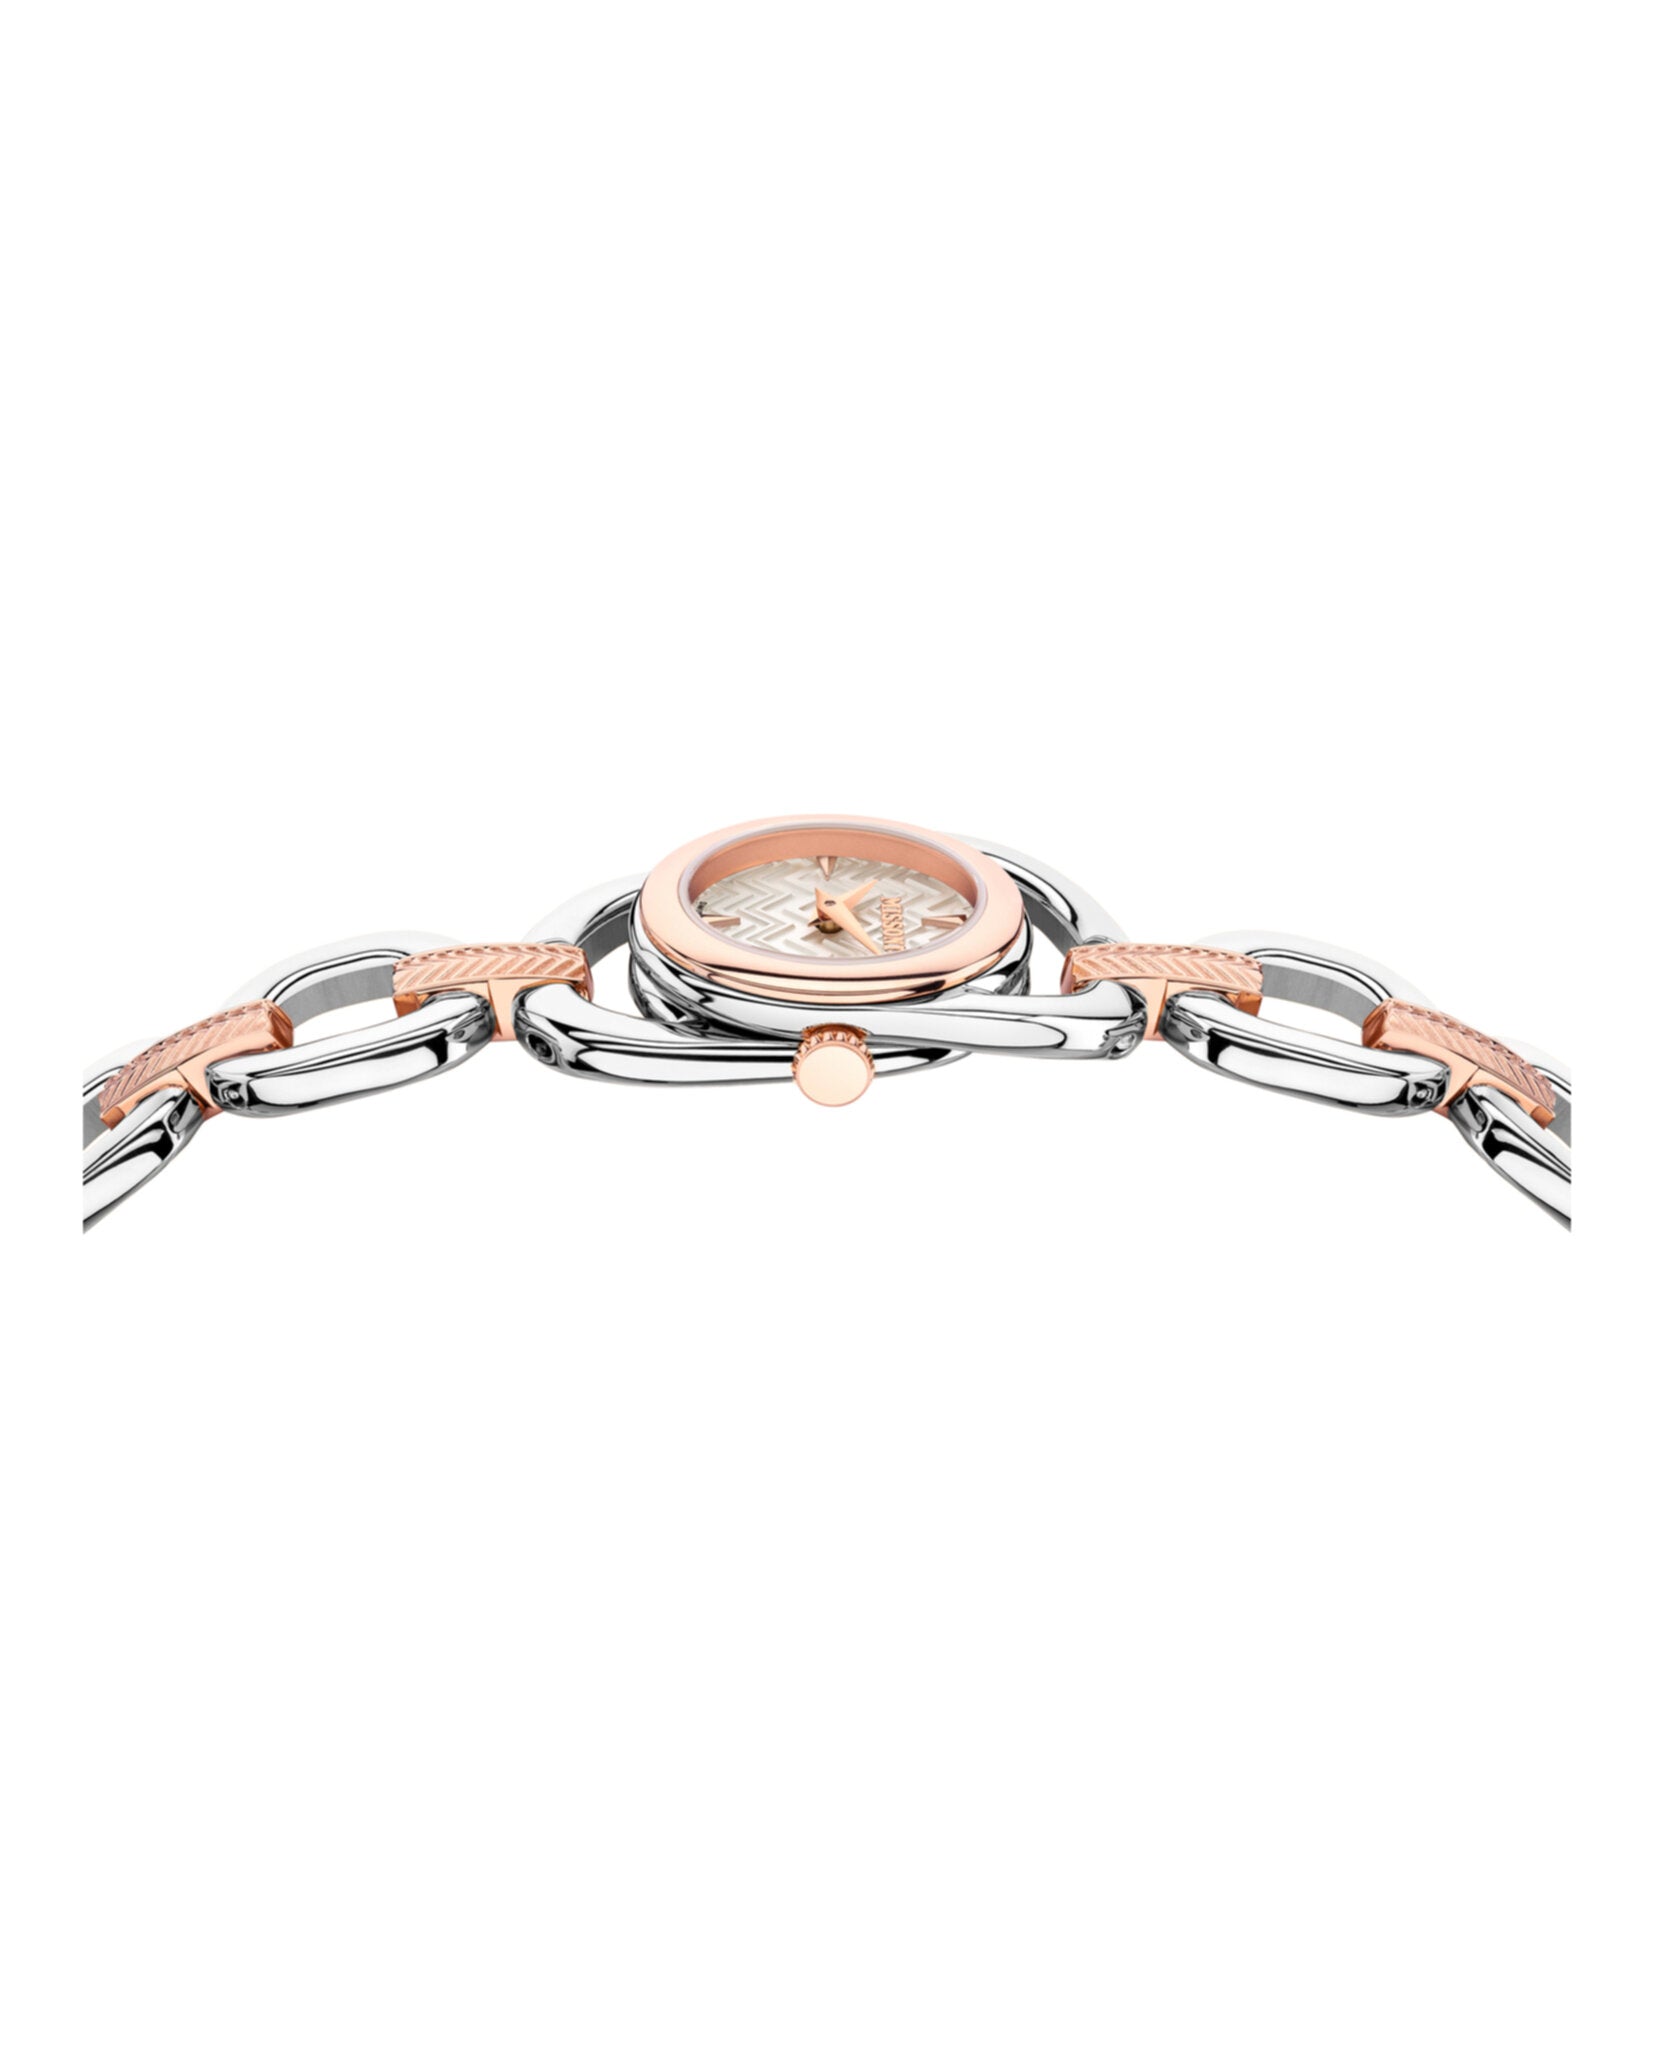 Missoni Gioiello Chain Bracelet Watch